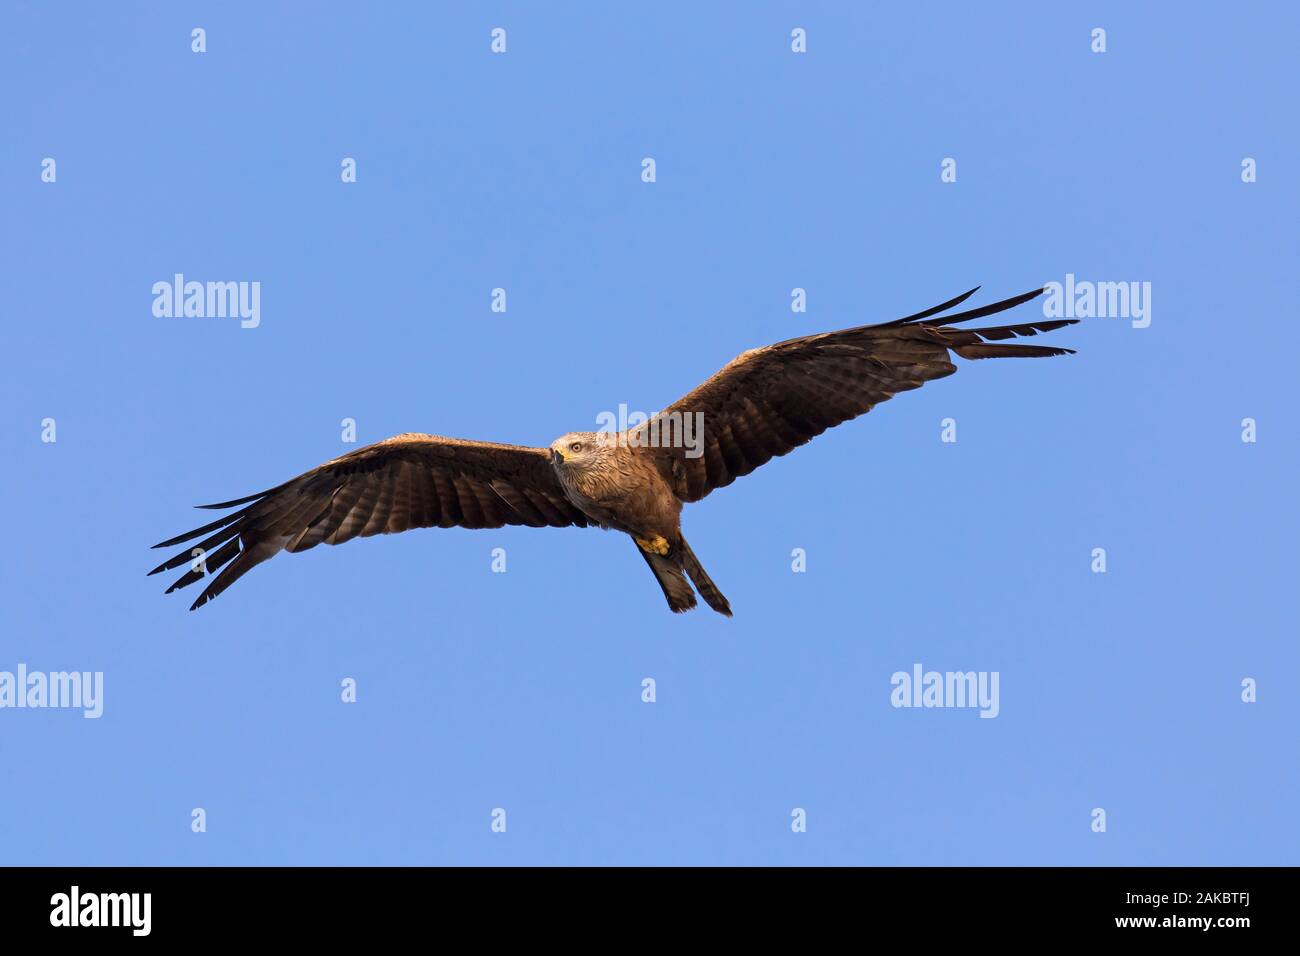 Black kite (Milvus migrans) in flight, migratory bird soaring against blue sky Stock Photo